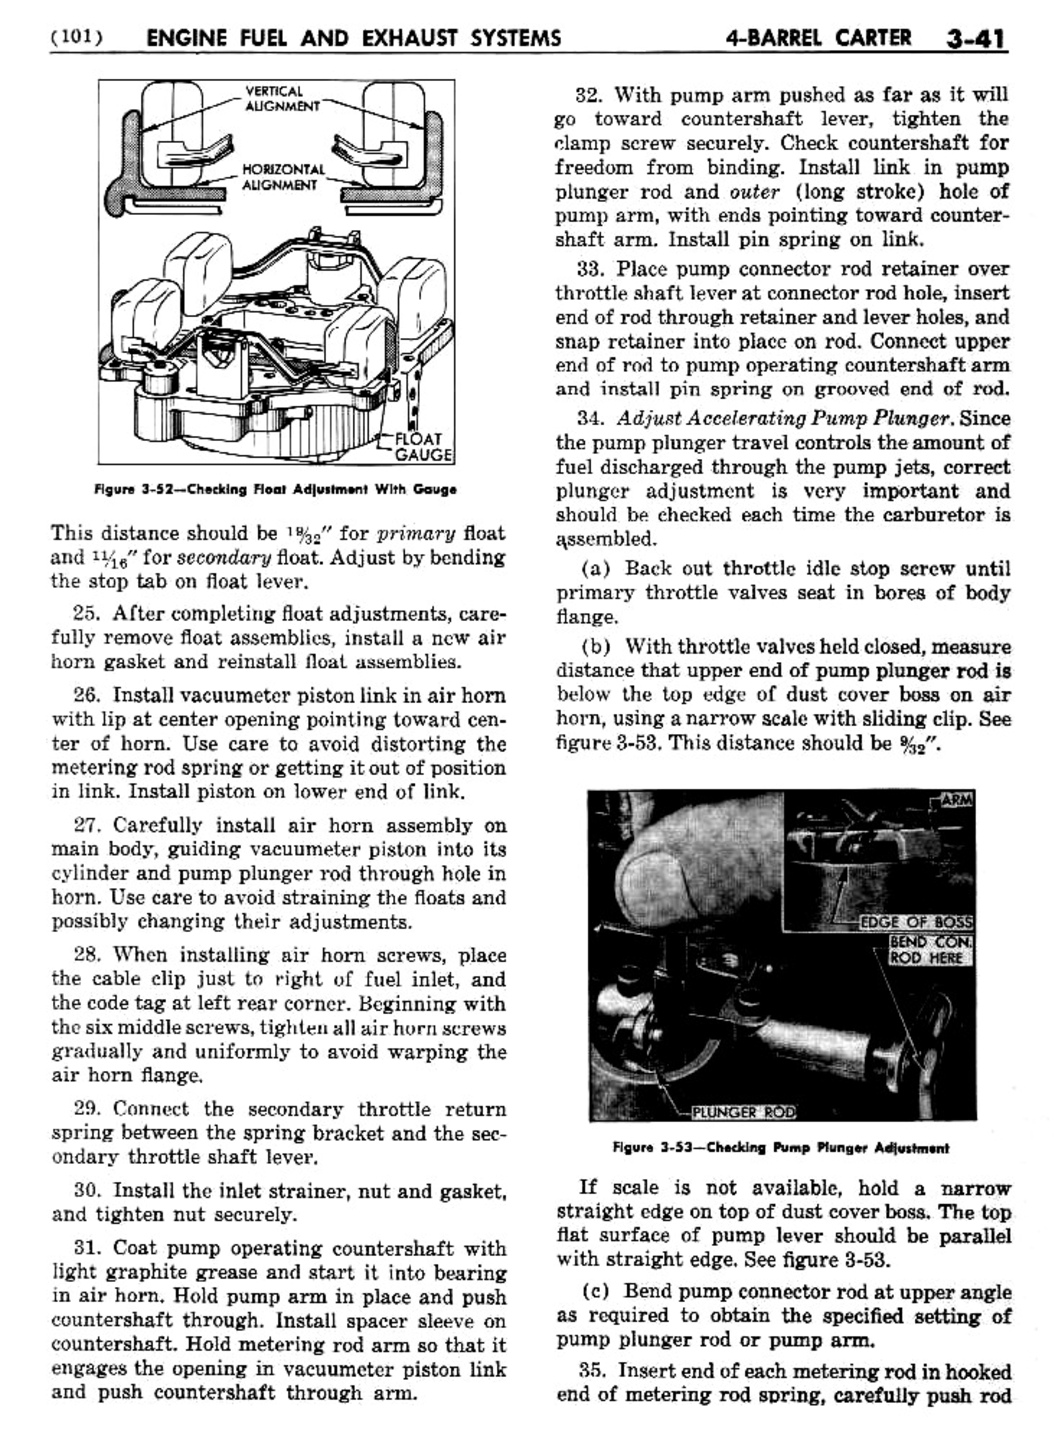 n_04 1955 Buick Shop Manual - Engine Fuel & Exhaust-041-041.jpg